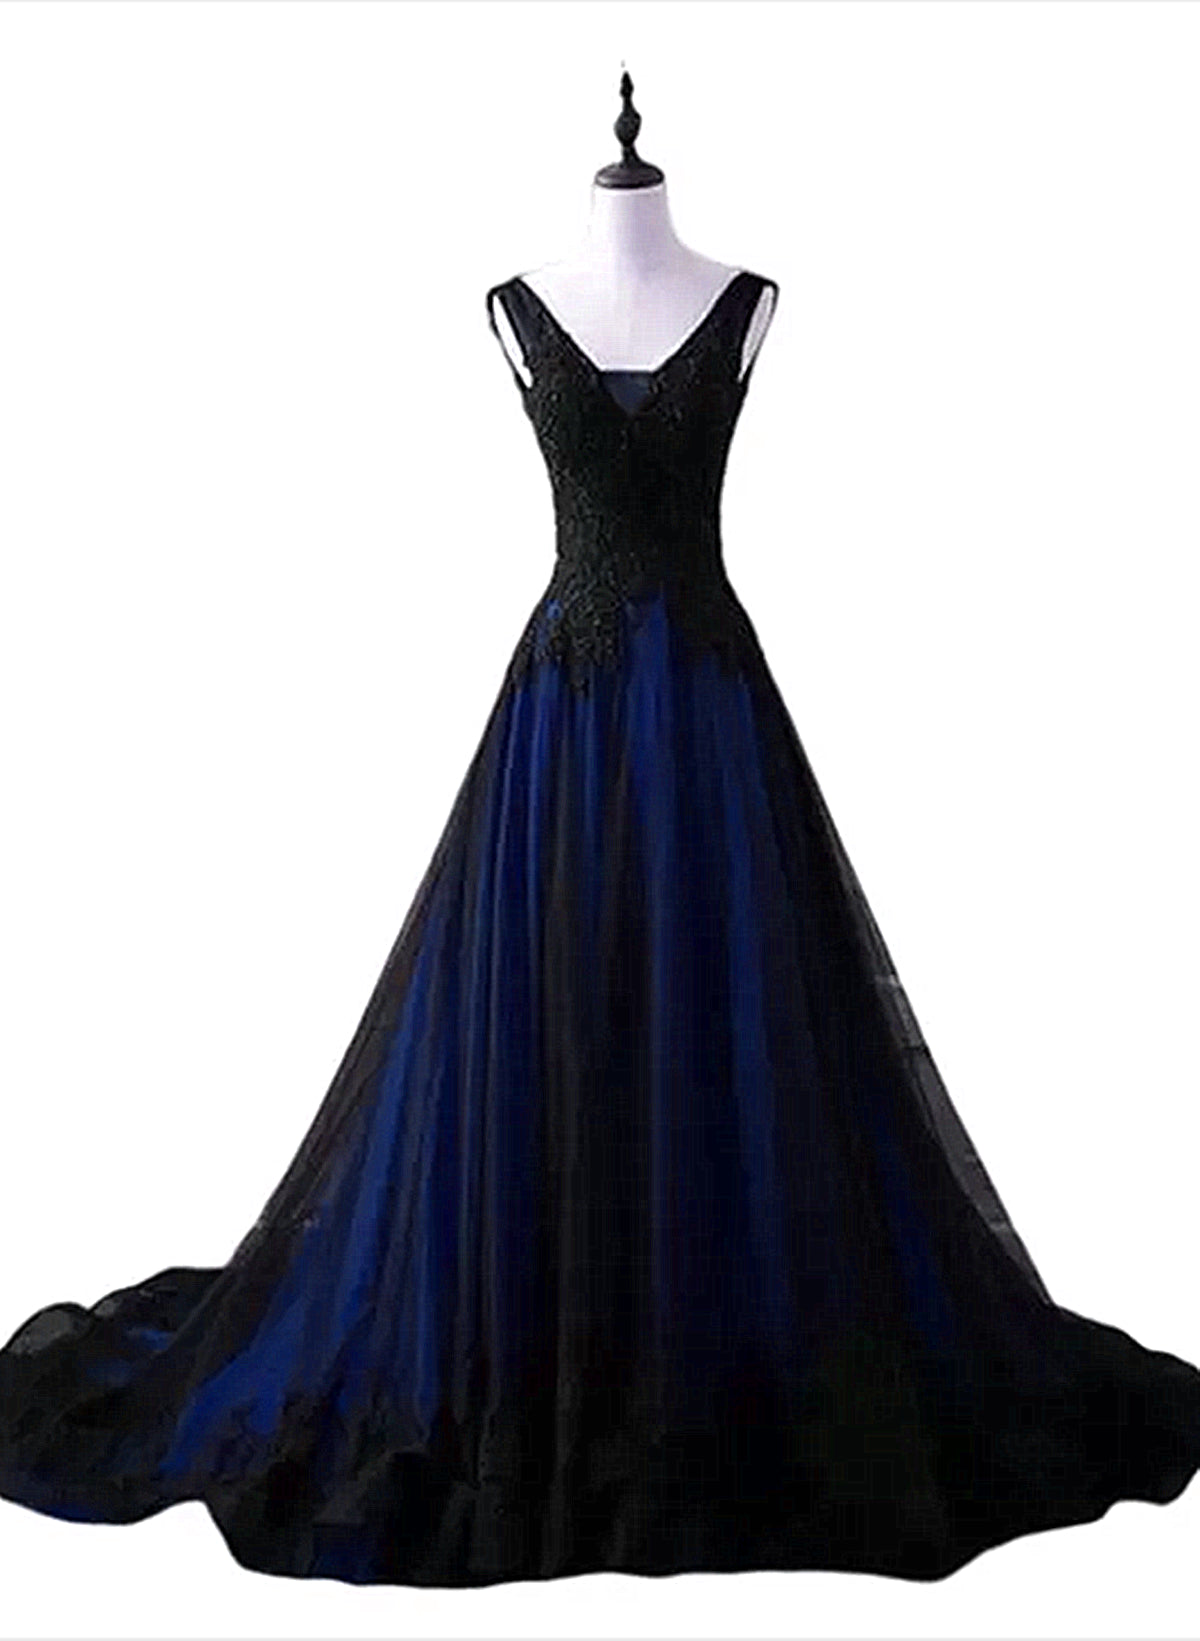 Mini Dress, Black and Blue V-neckline Lace Applique Long Formal Dress, Black and Blue Prom Dress